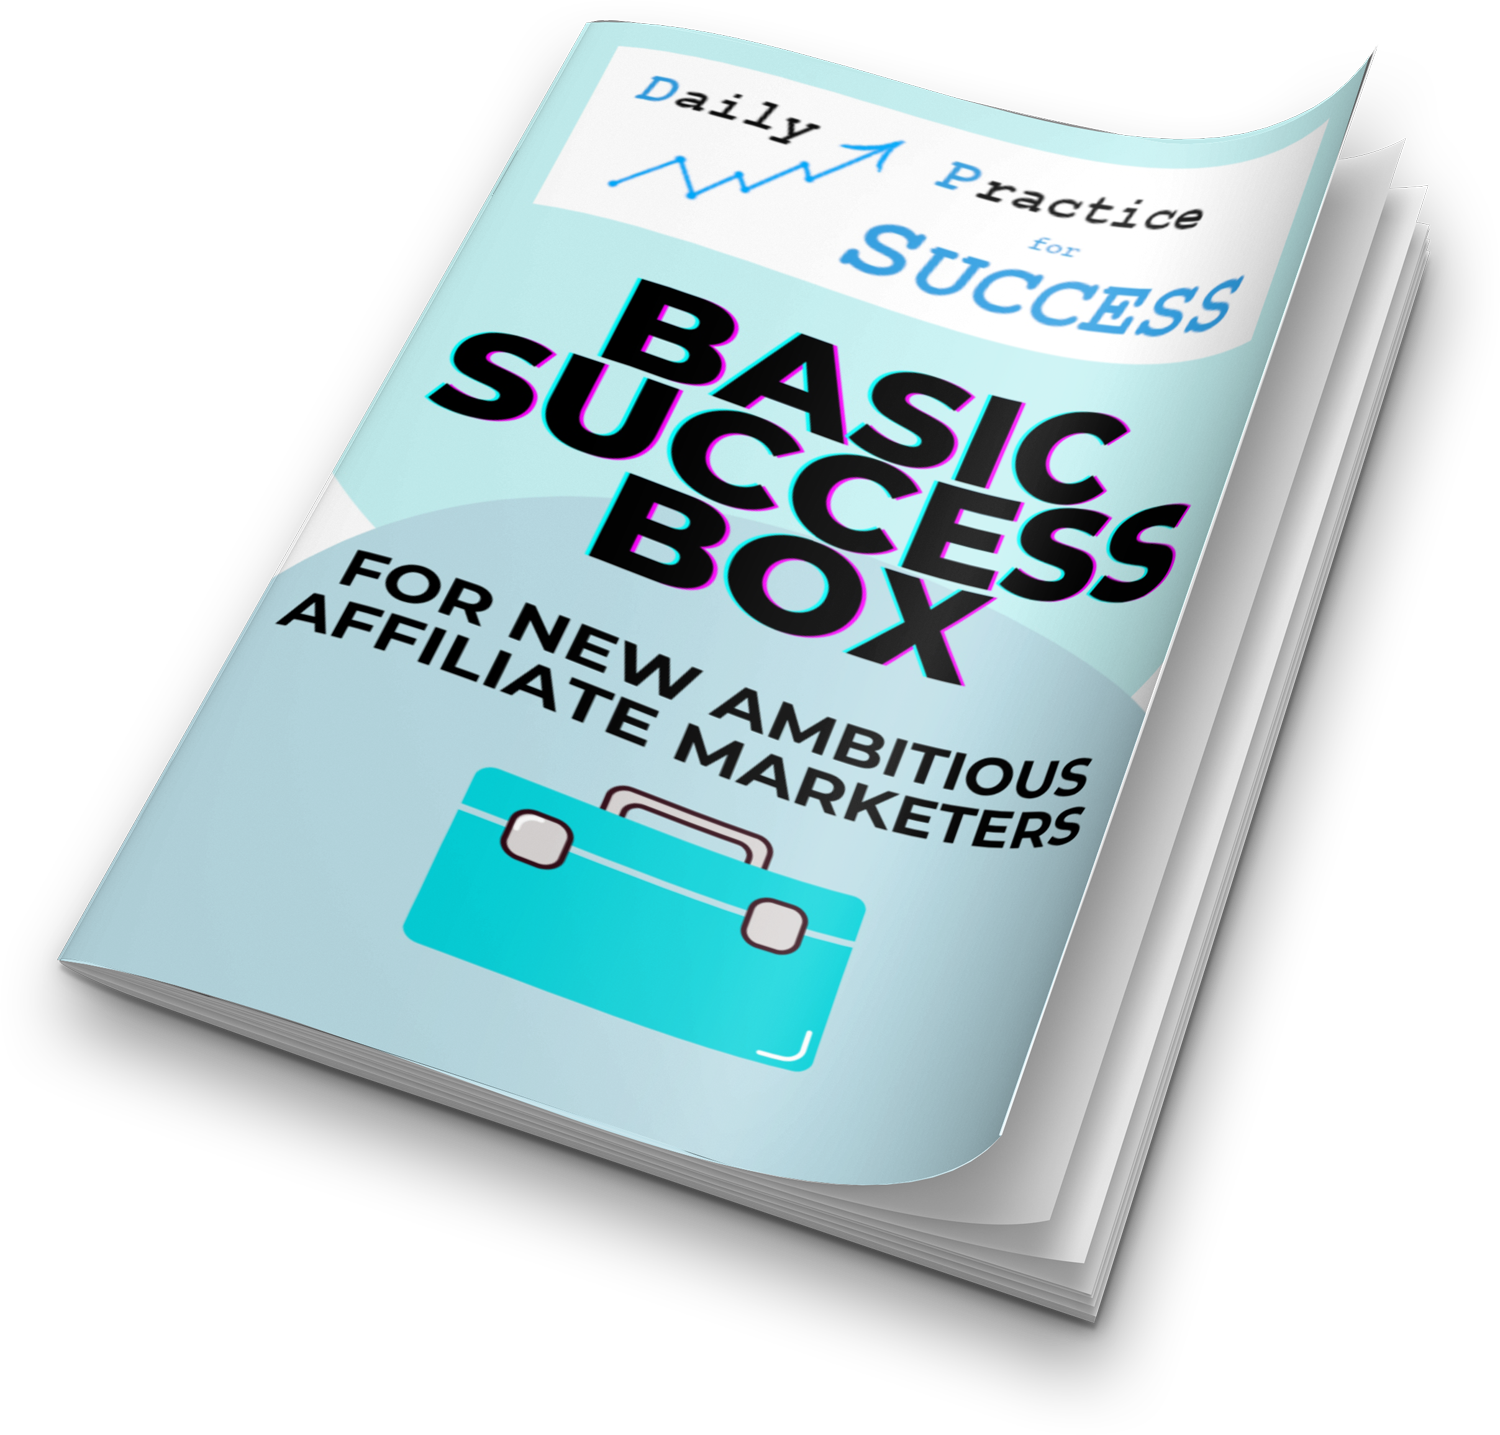 Basic successbox for Affiliatemarketing actiontakers